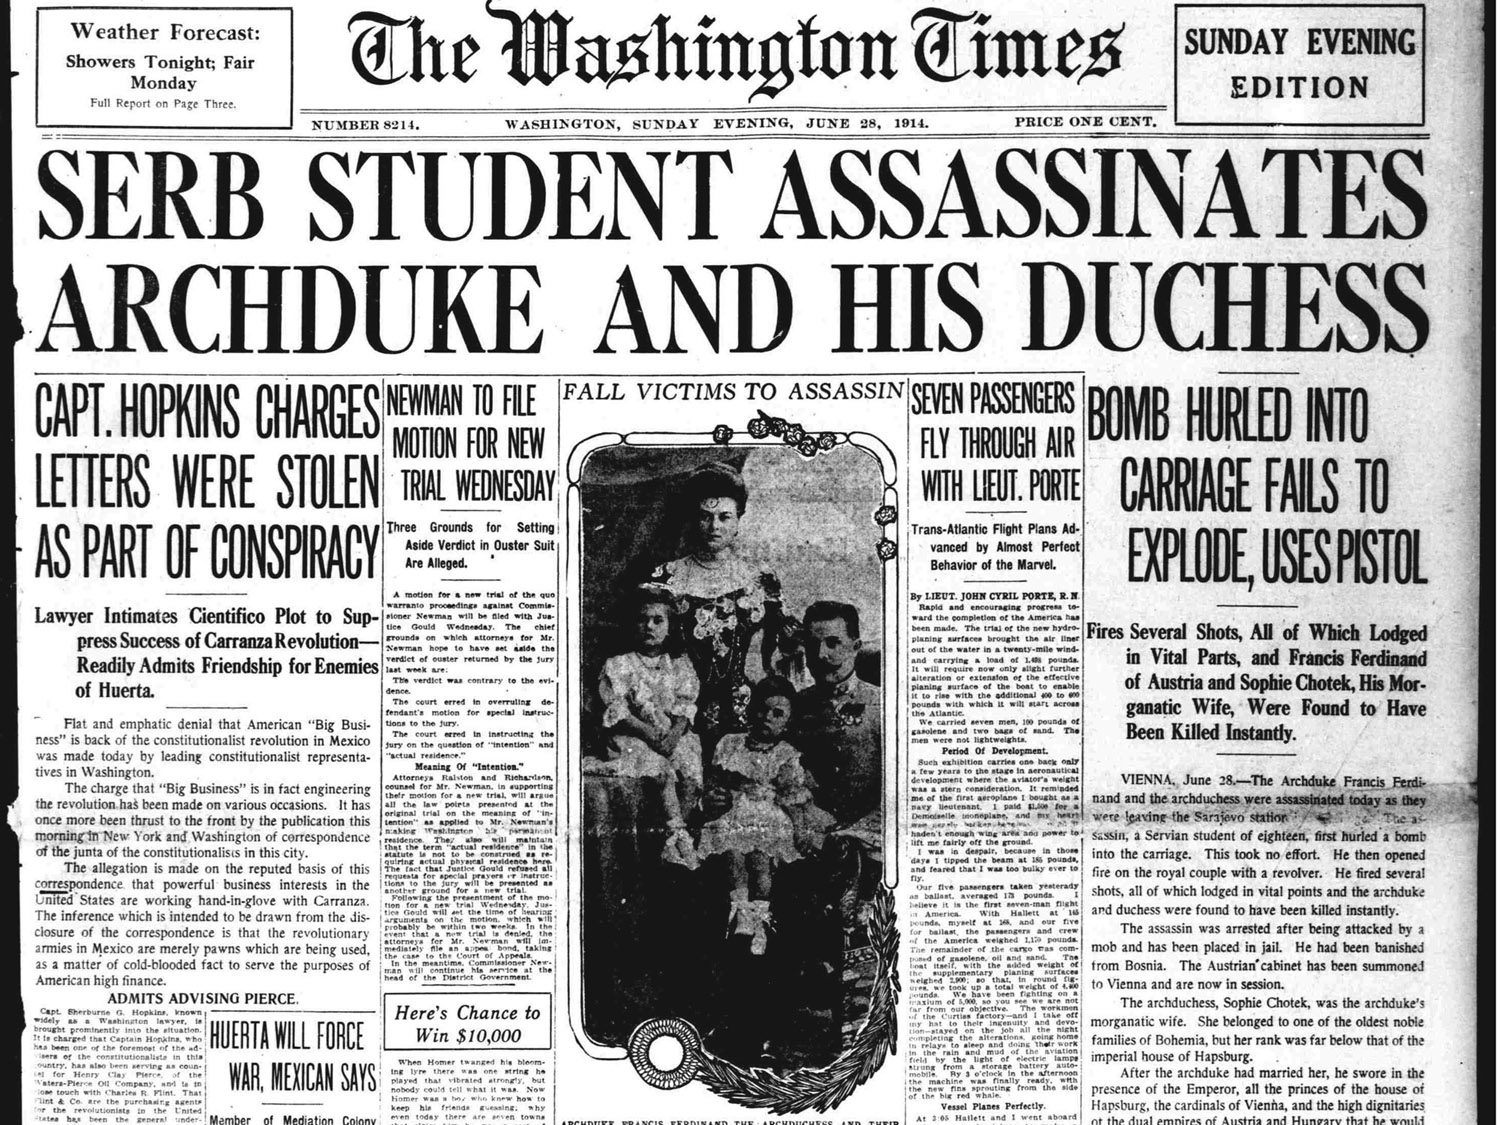 The Washington Times June 28, 1914 - Archduke Ferdinand